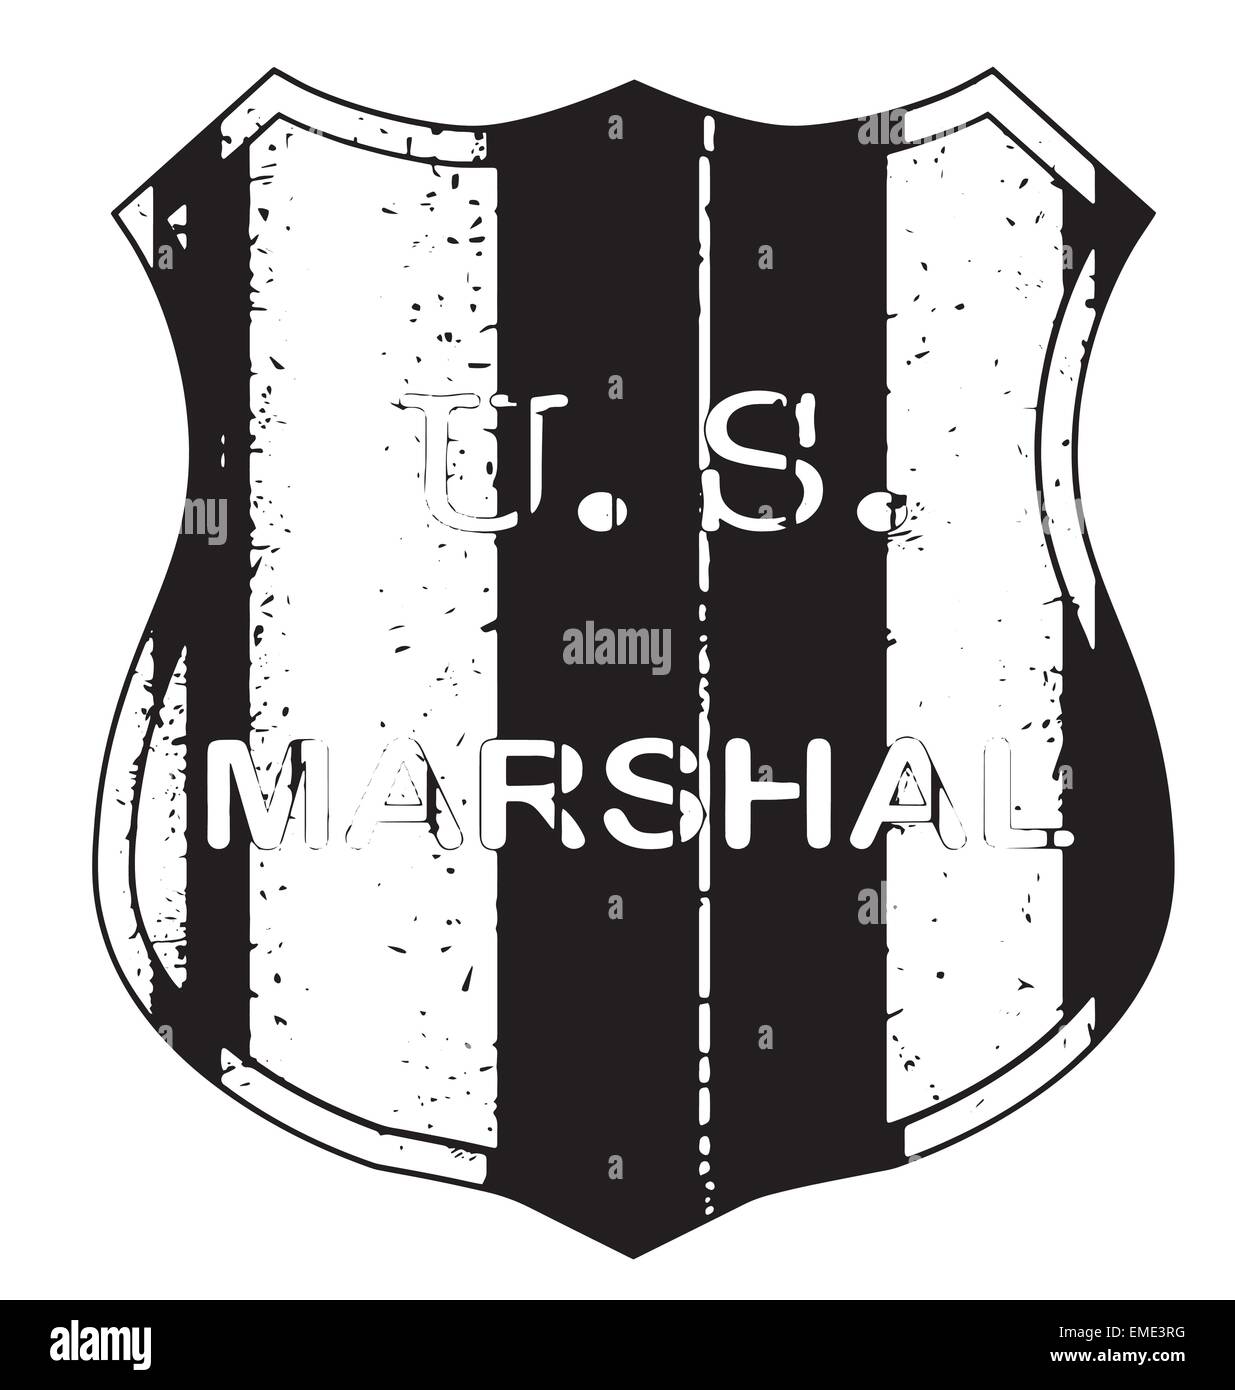 Marshal Shield Badge Stock Vector